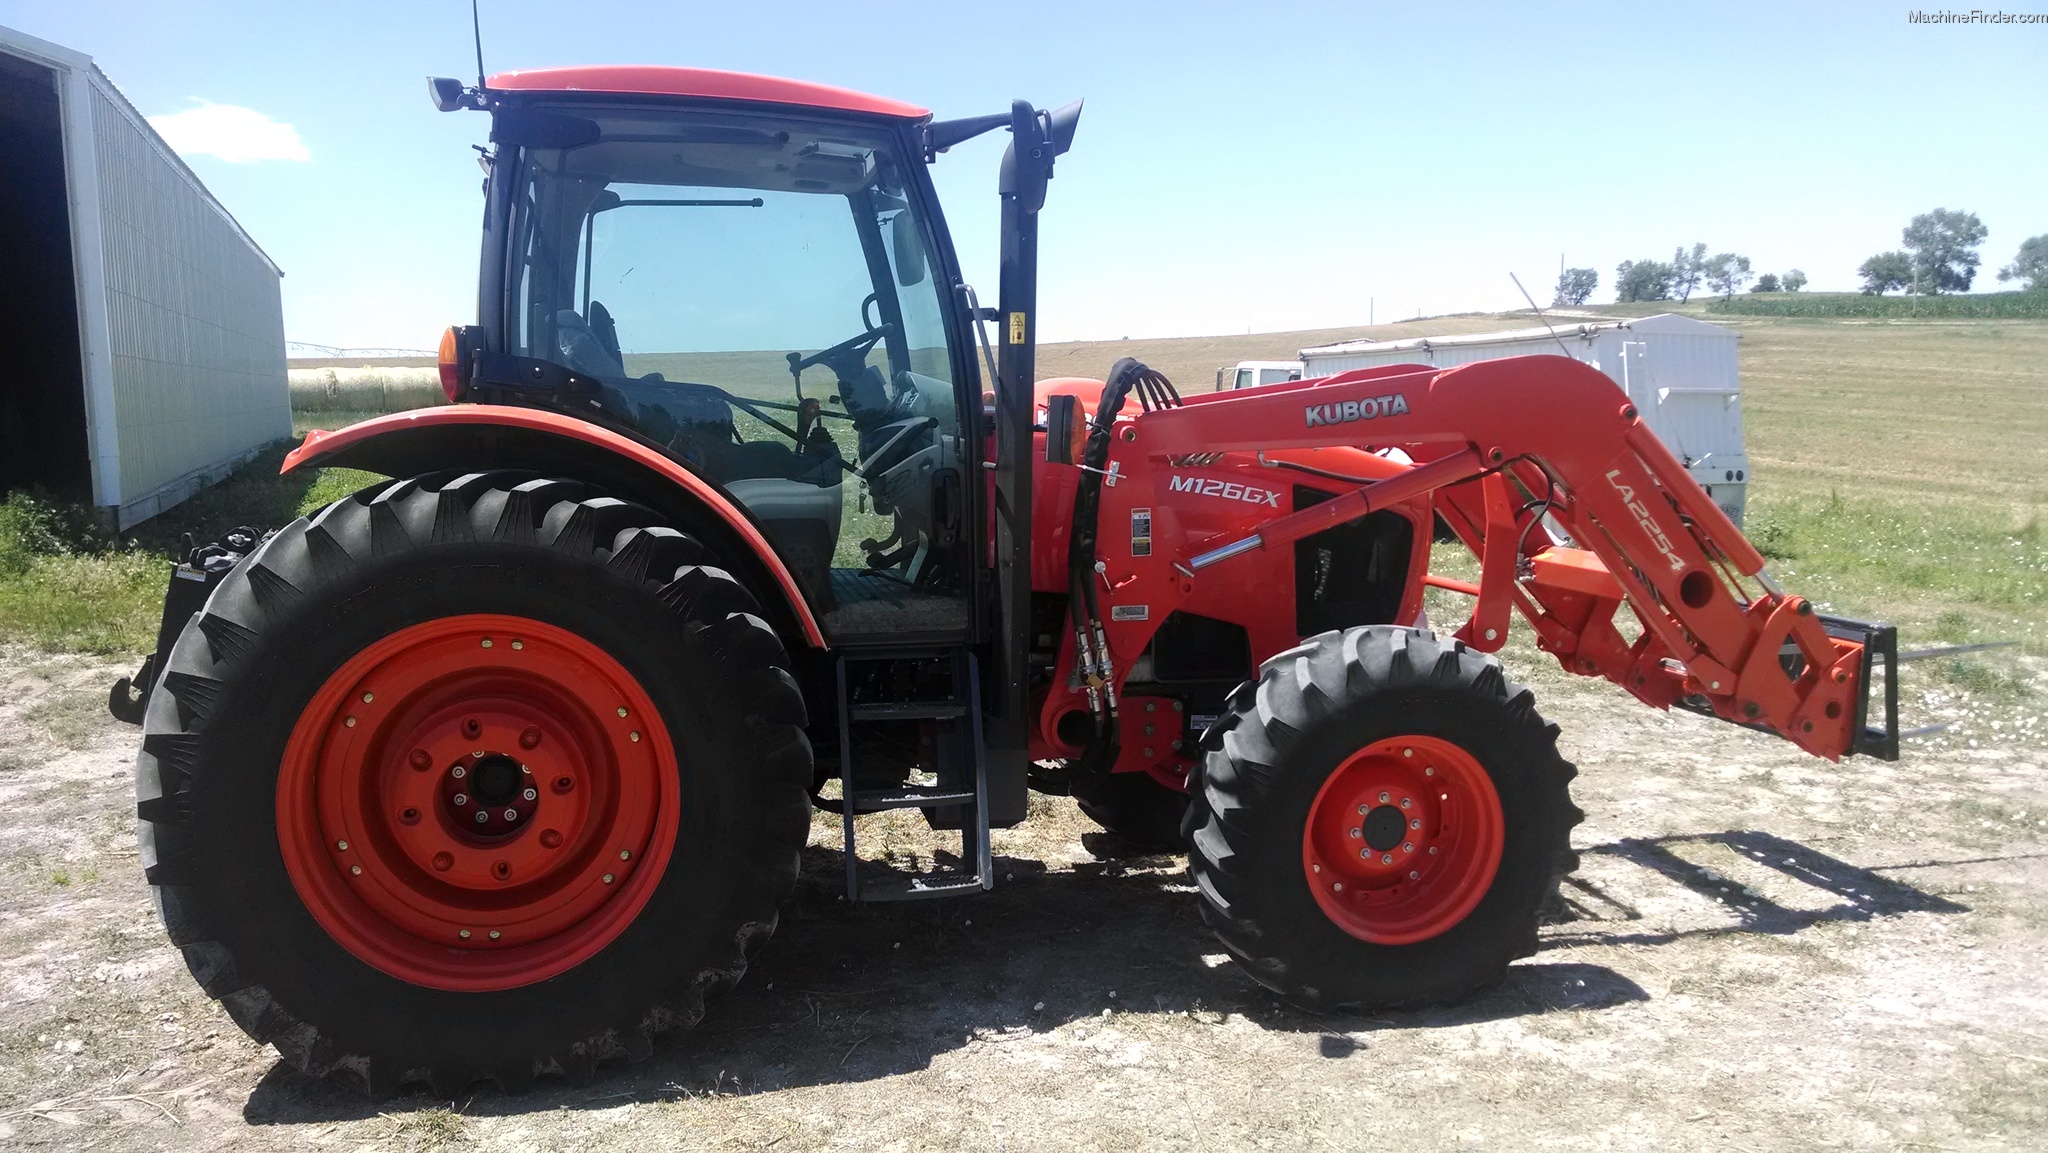 2014 Kubota M126GX Tractors - Row Crop (+100hp) - John Deere ...